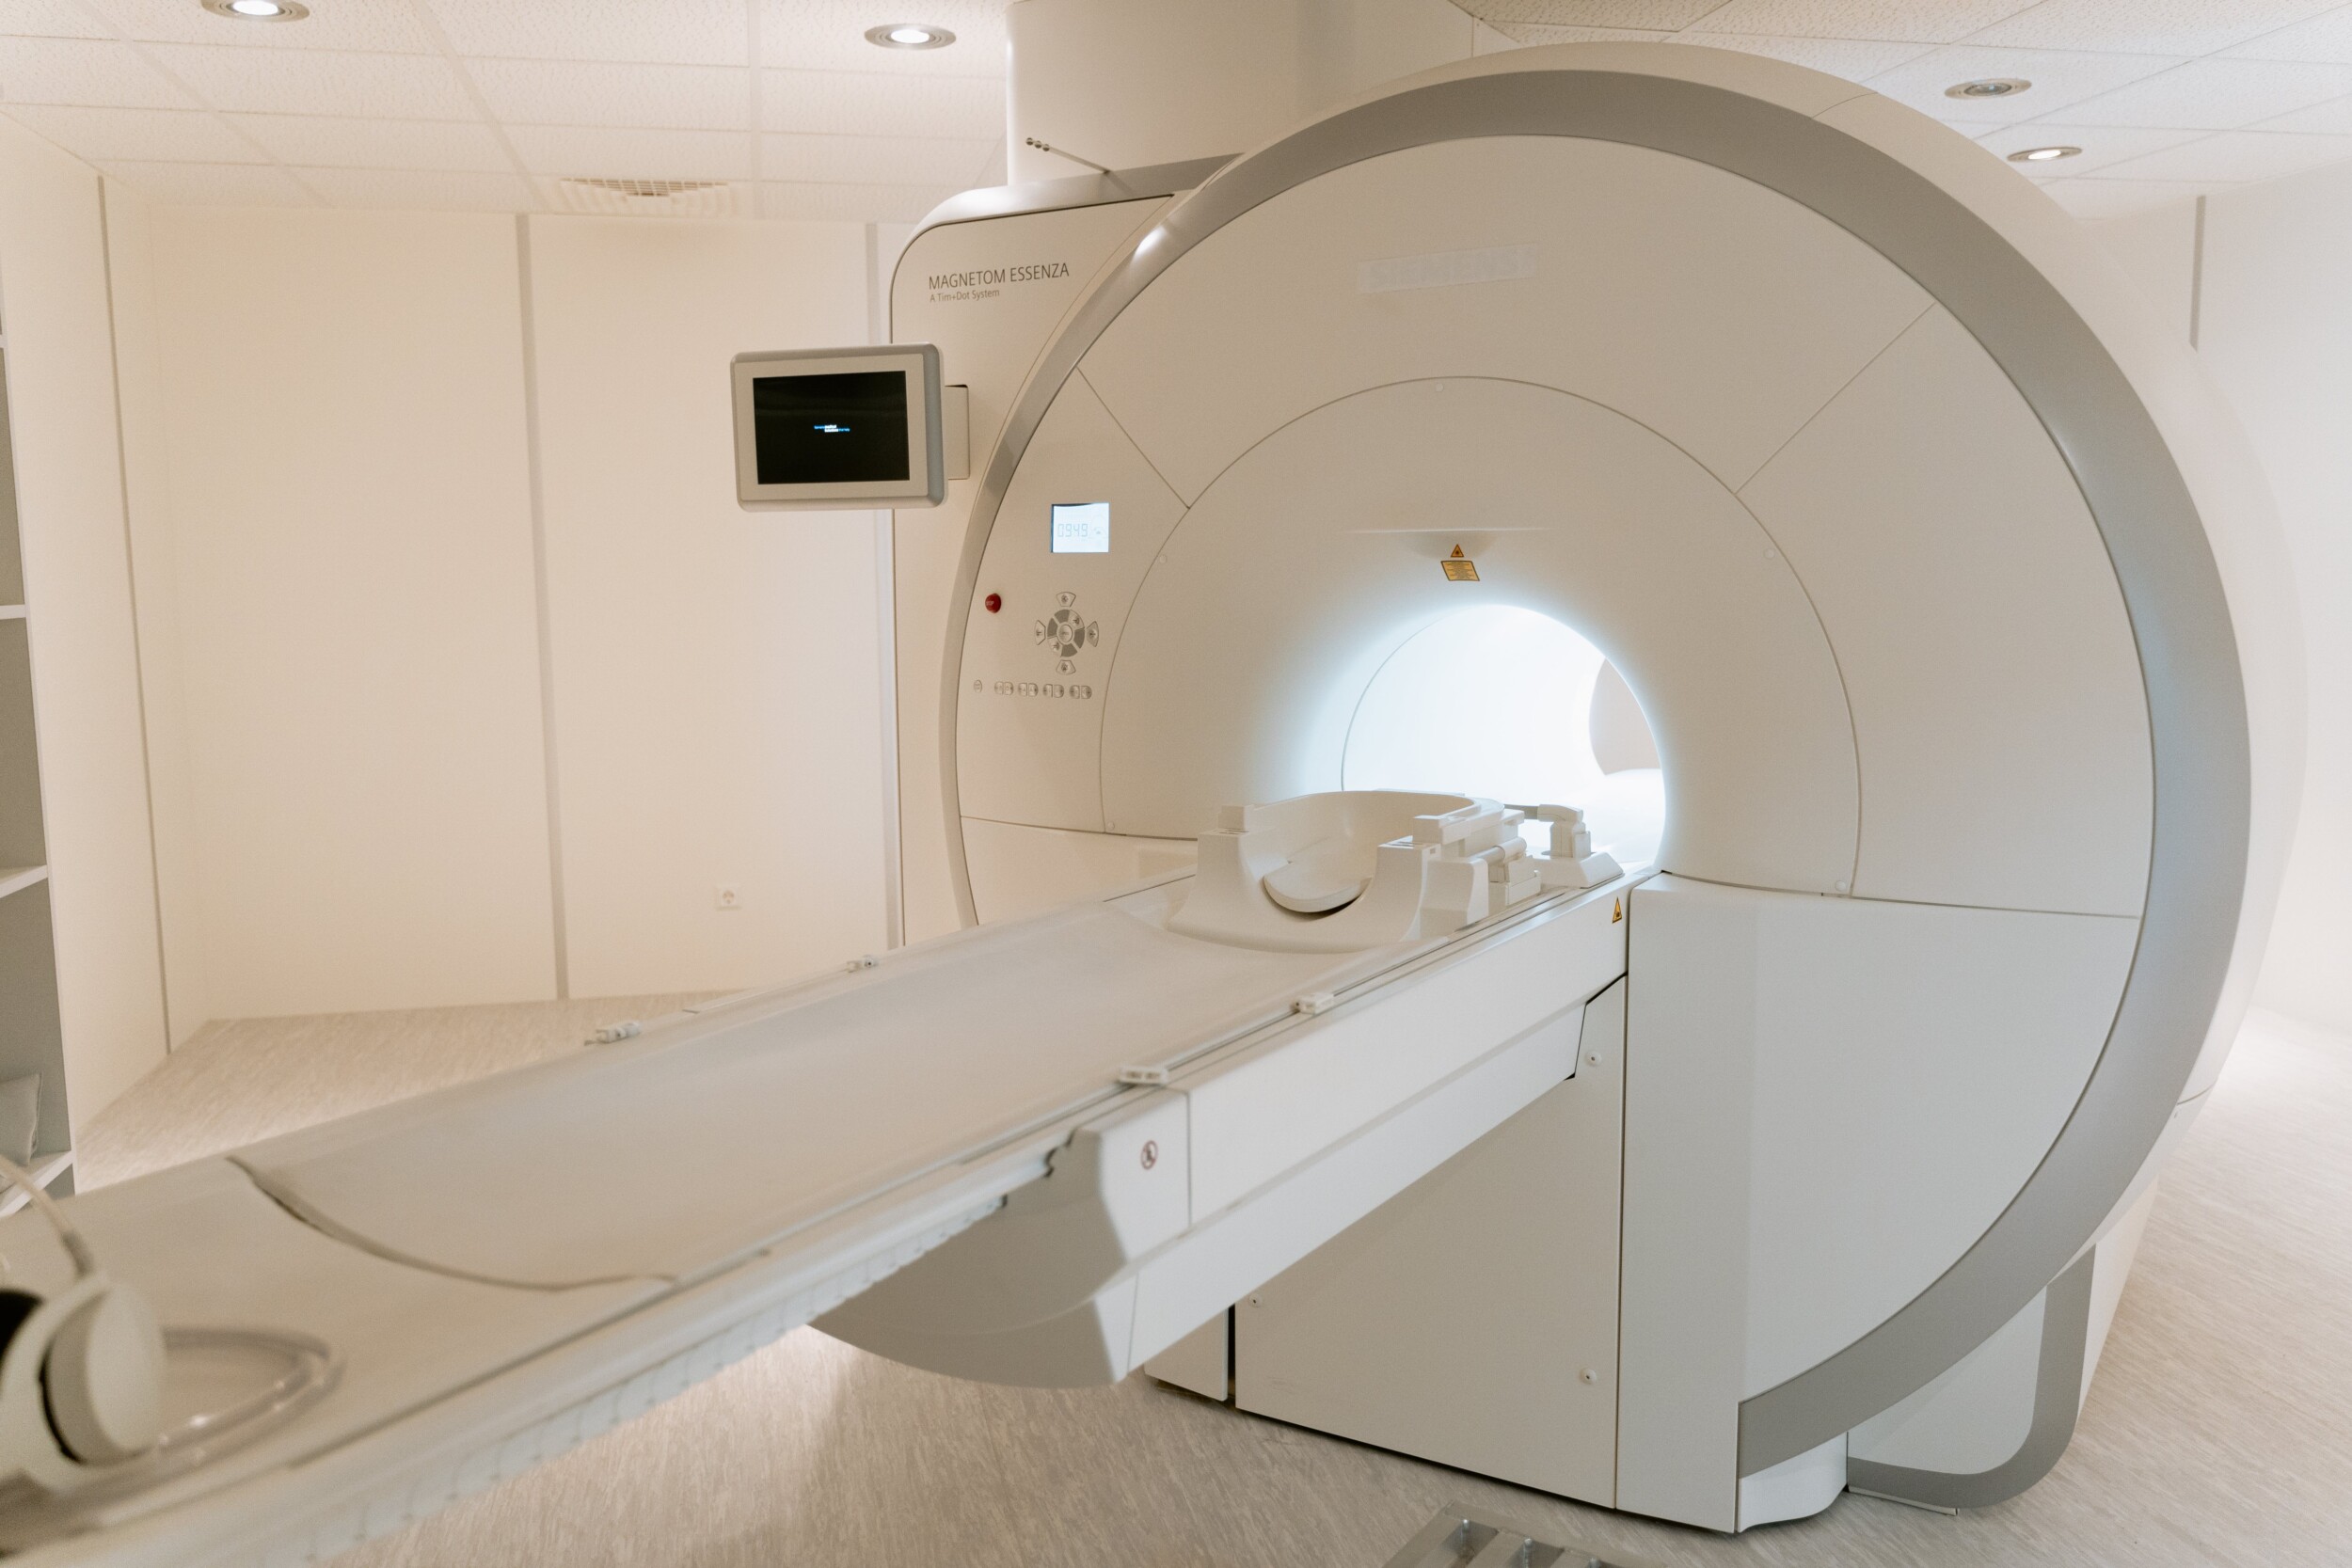 , Radiologie, Spitalverbund AR